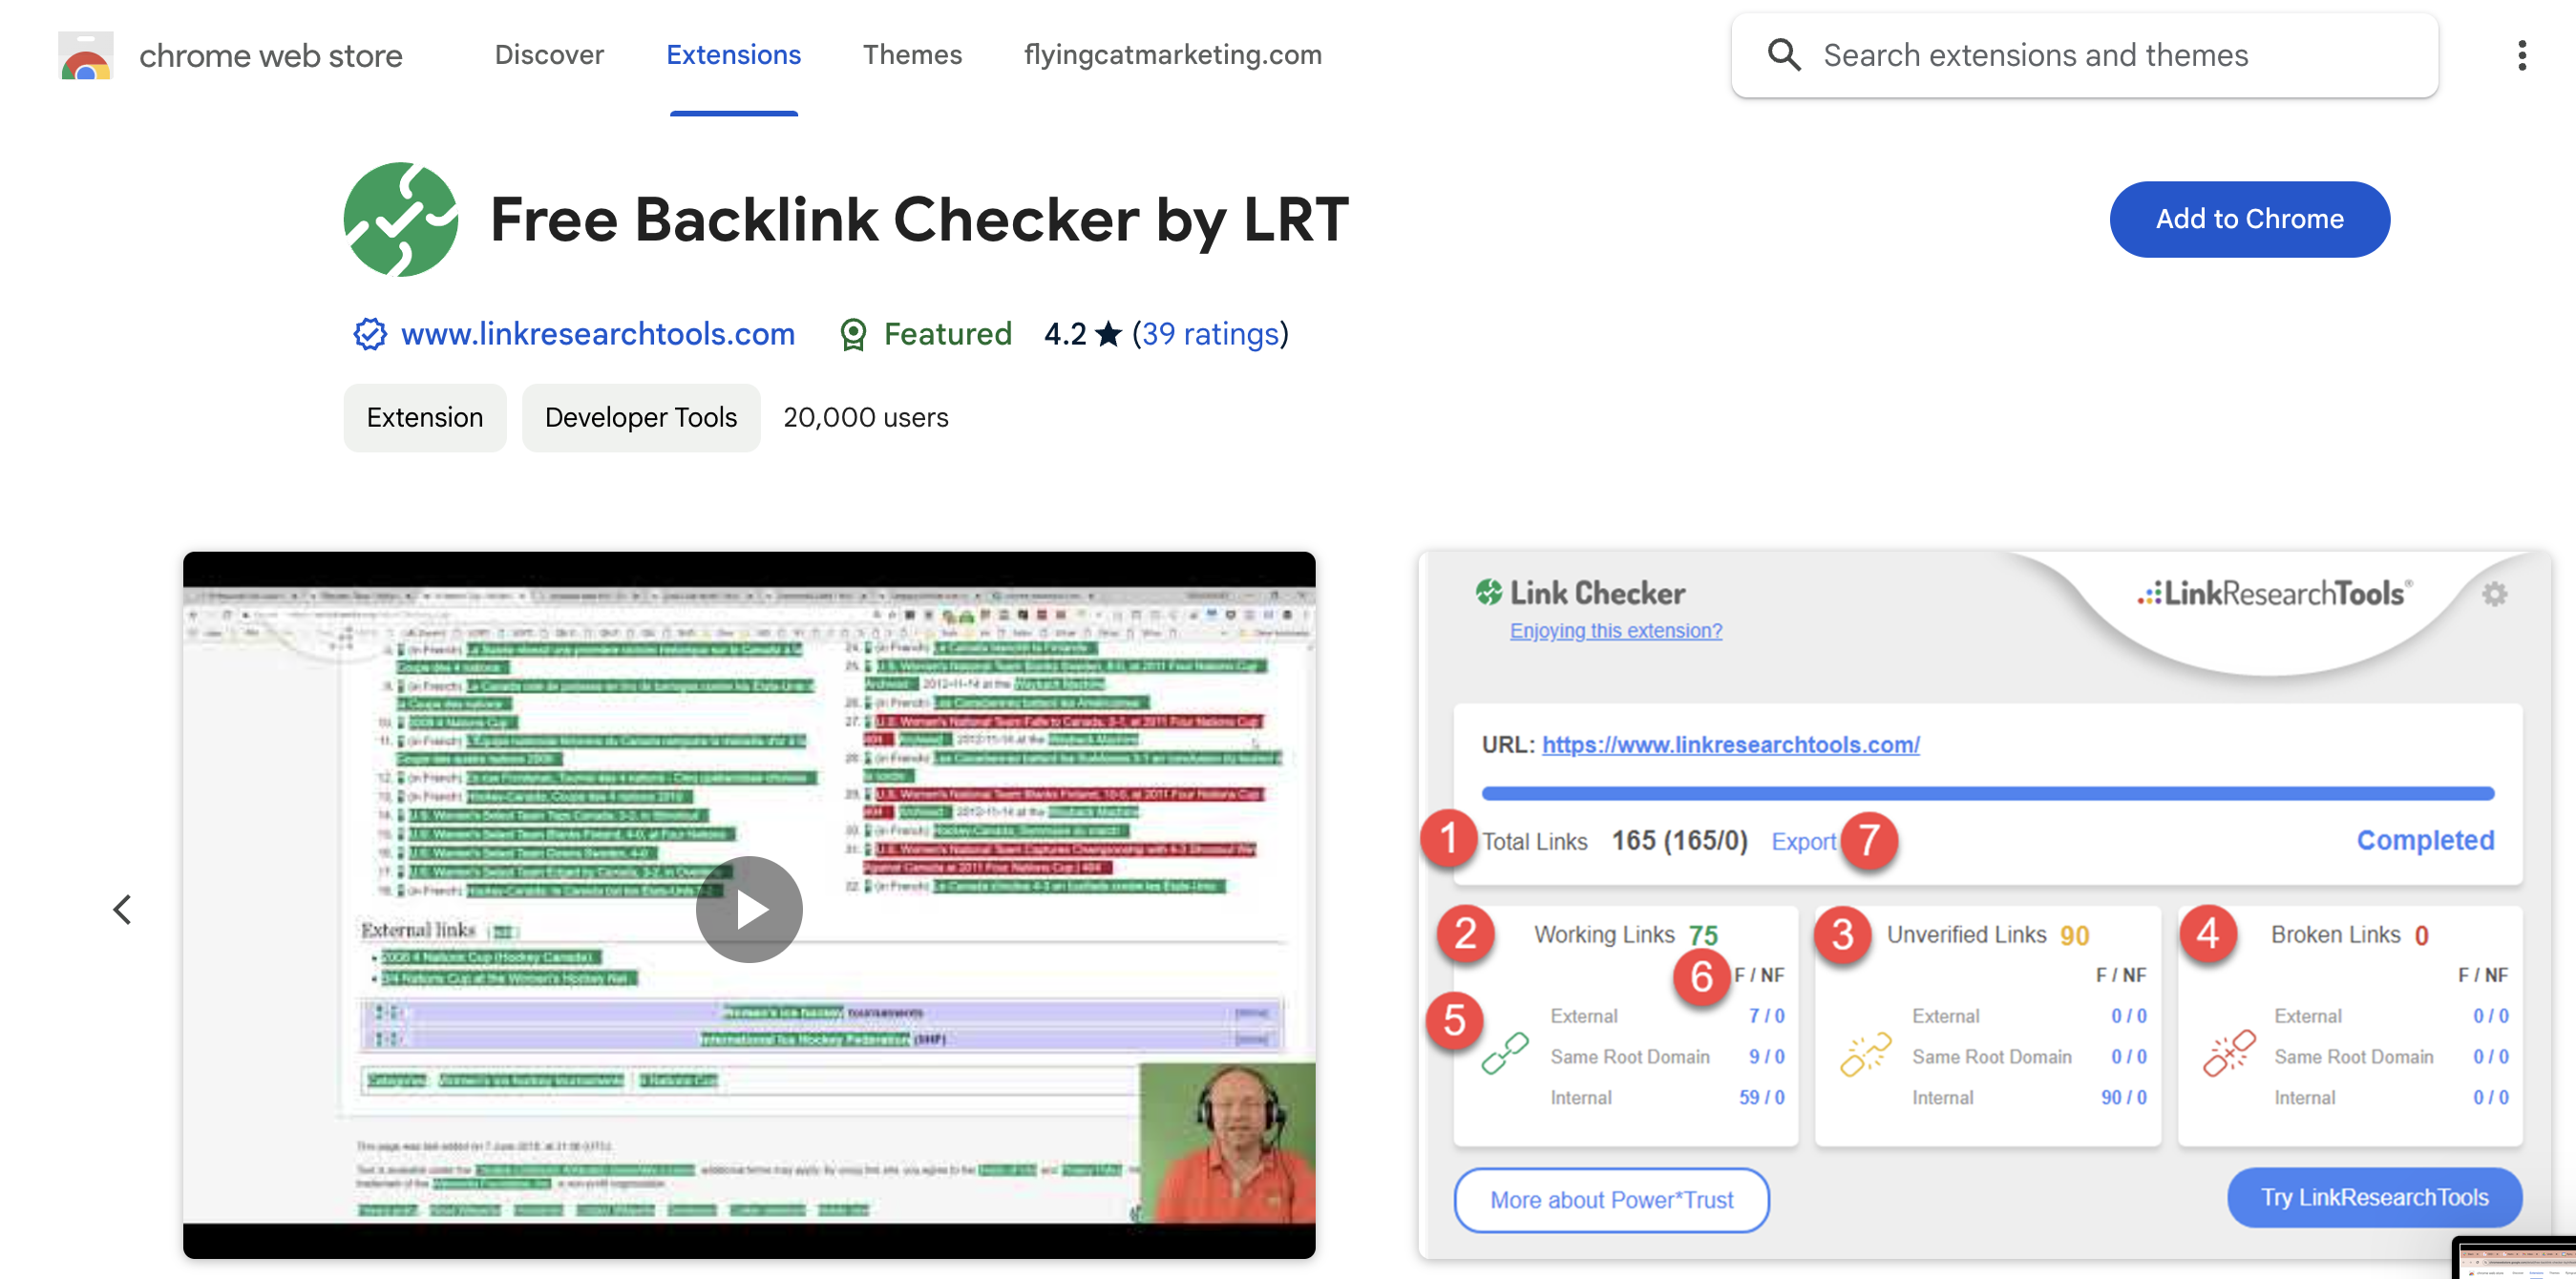 Use a free backlink checker through Google Chrome to detect external broken links